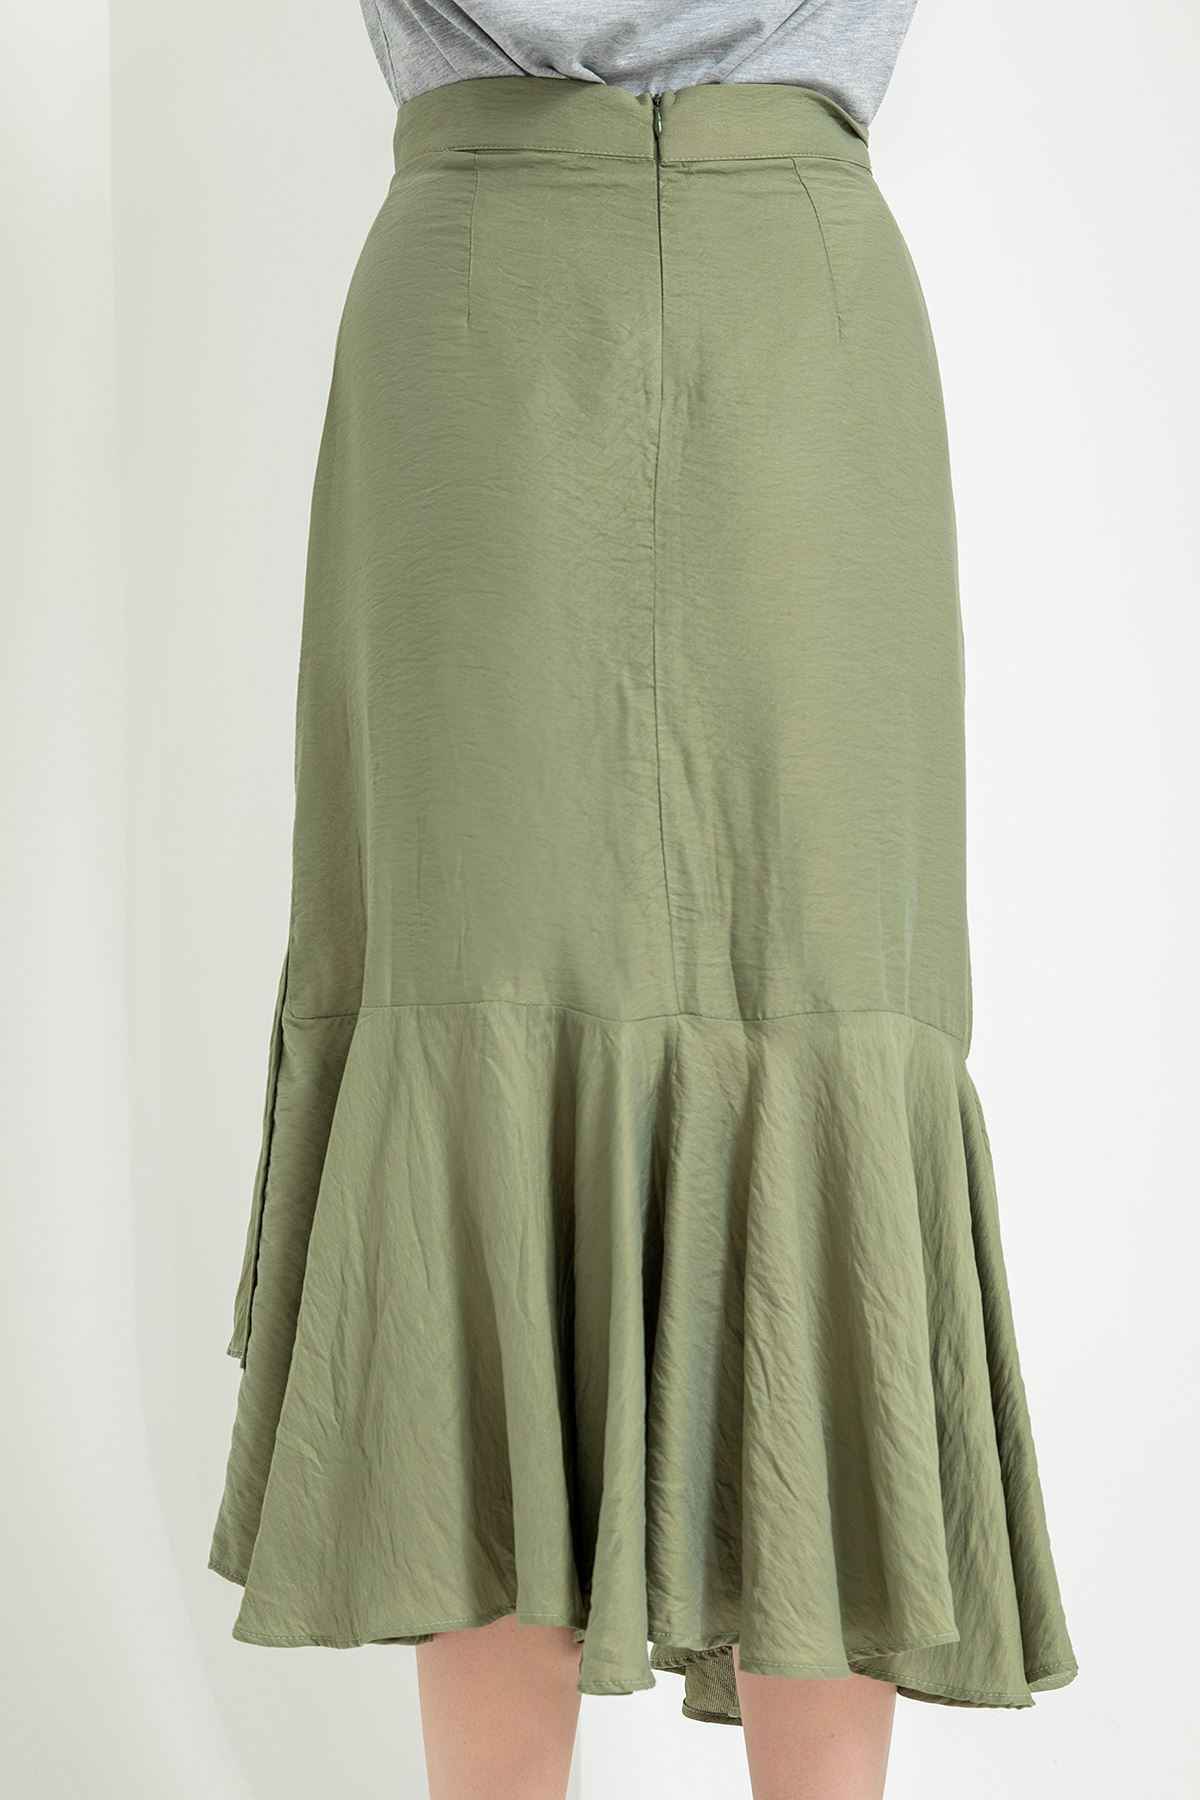 Aerobin Fabric Below Knee Full Fit Ruffle Women'S Skirt - Khaki 